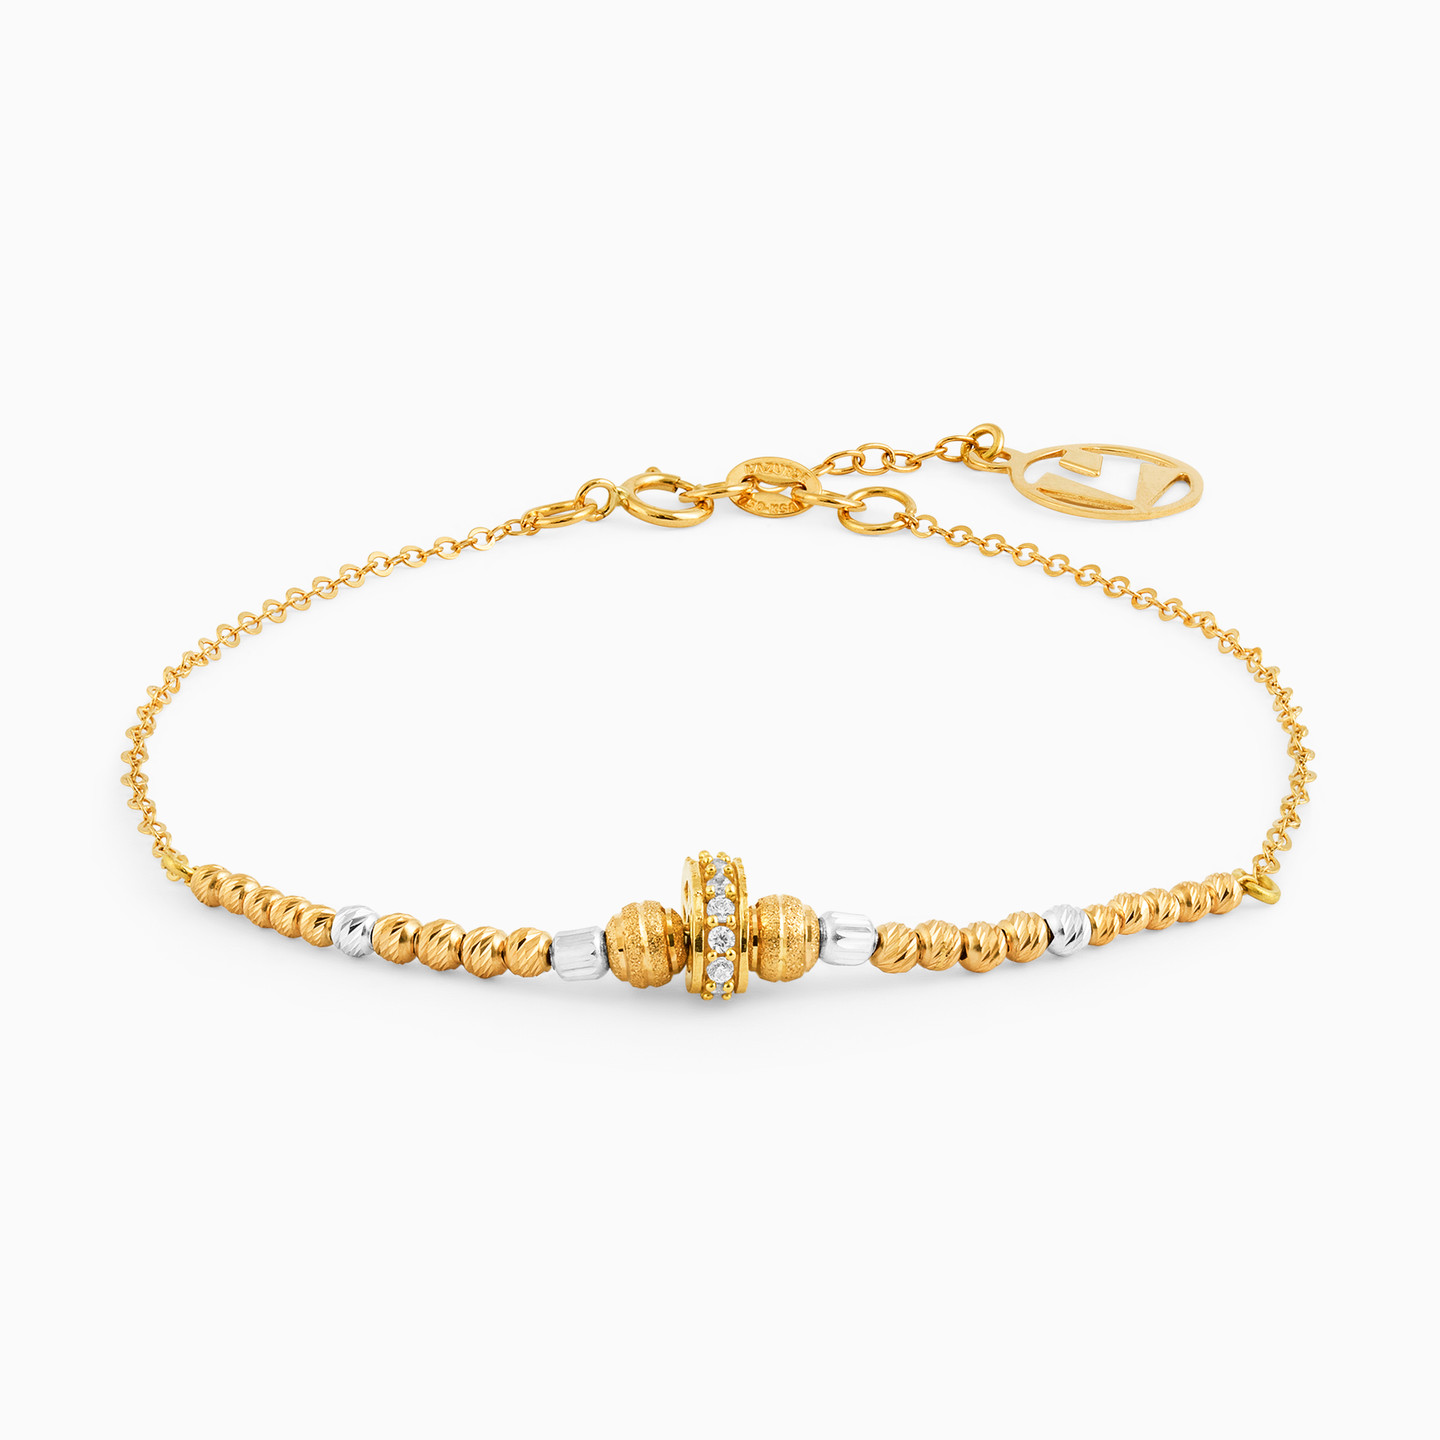 18K Gold Cubic Zirconia Jewelry Set - 4 Pieces - 3